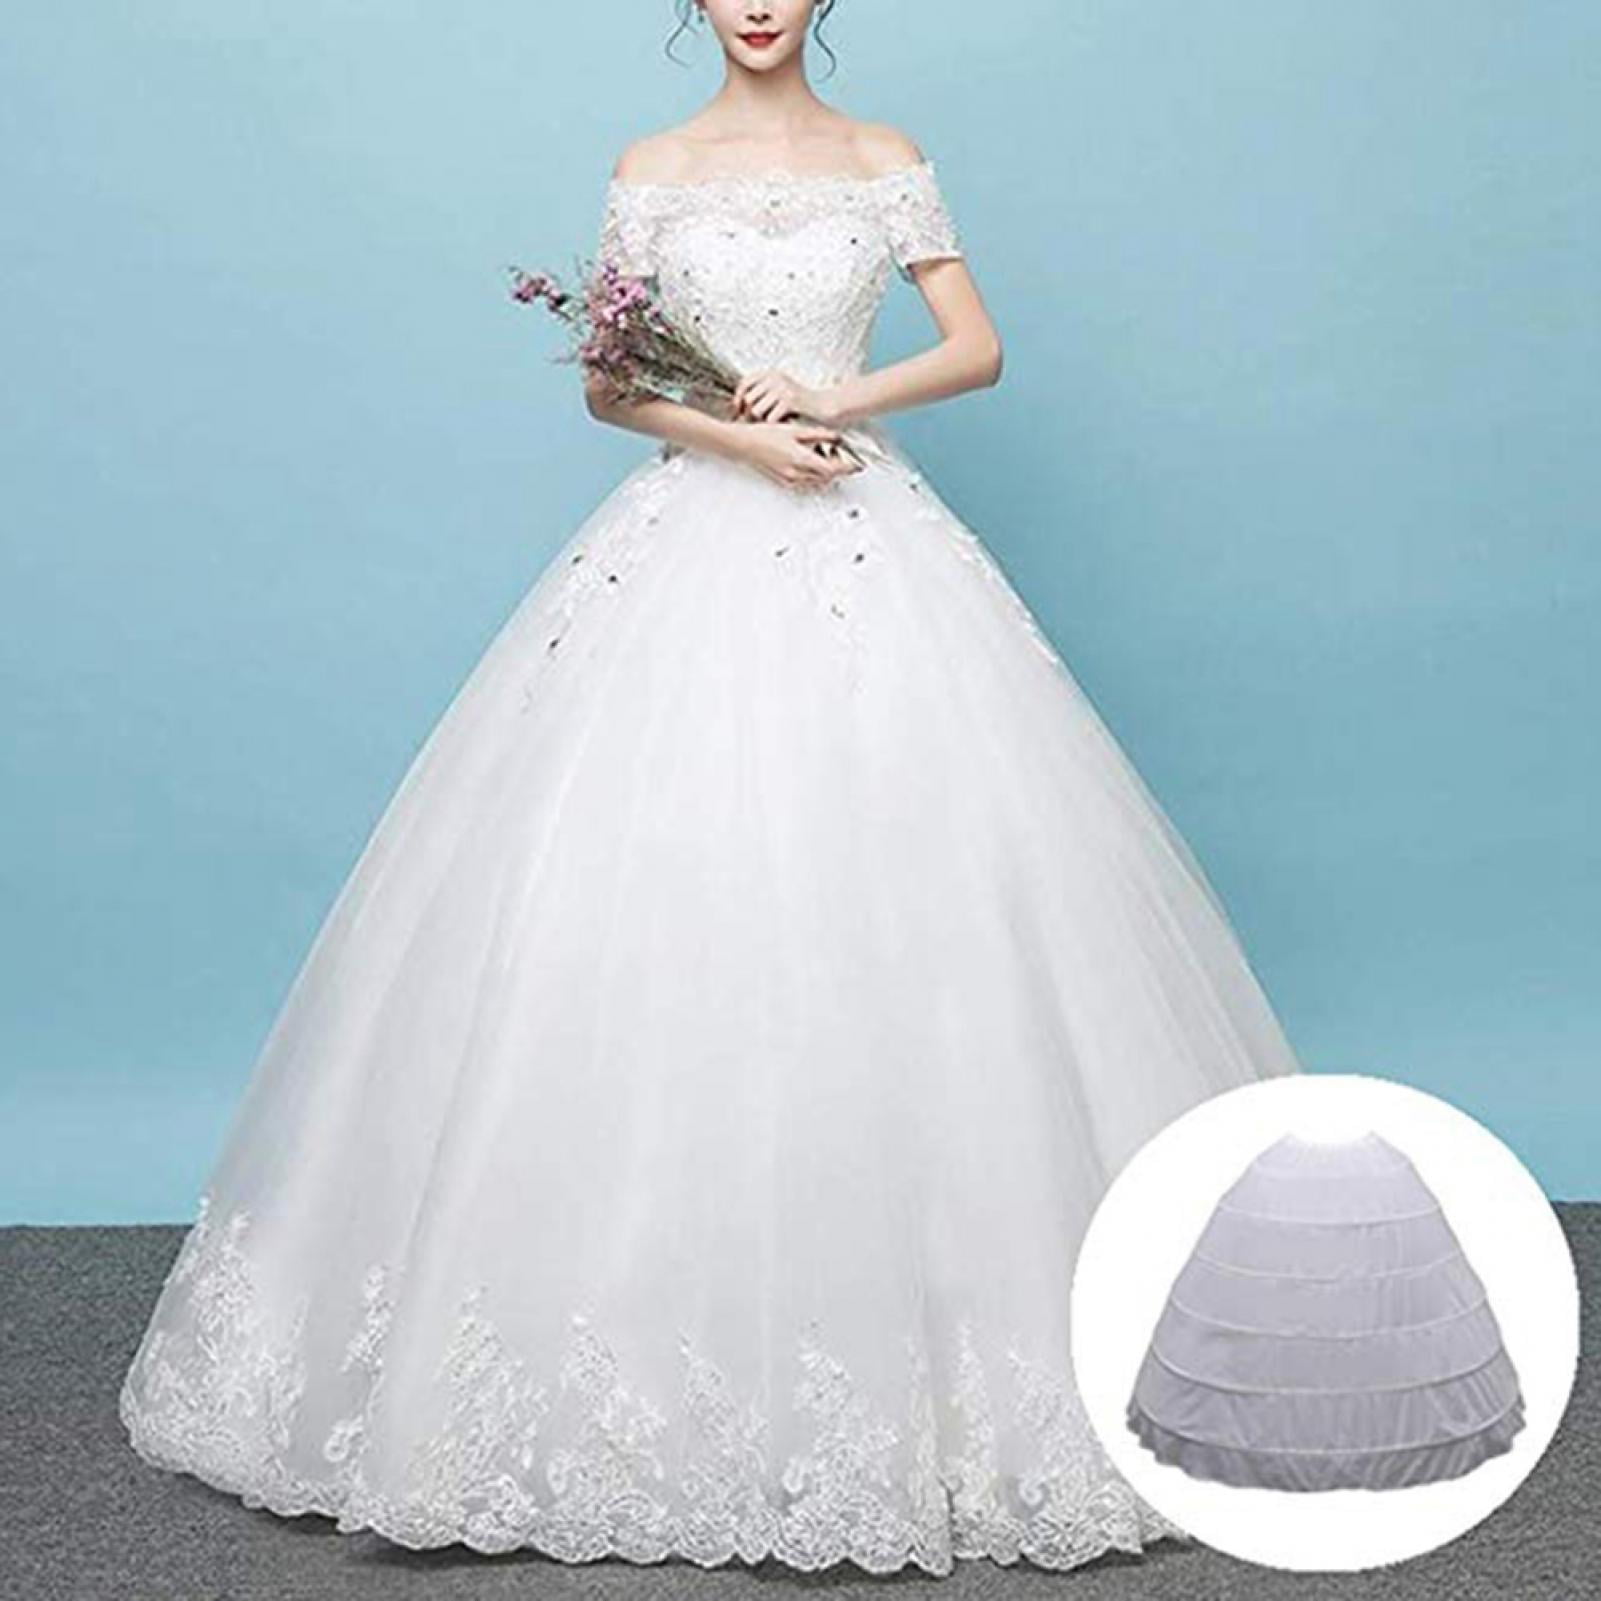 Wedding Petticoat Crinoline Slip Underskirt Bridal Dress Hoop Vintage Slips 